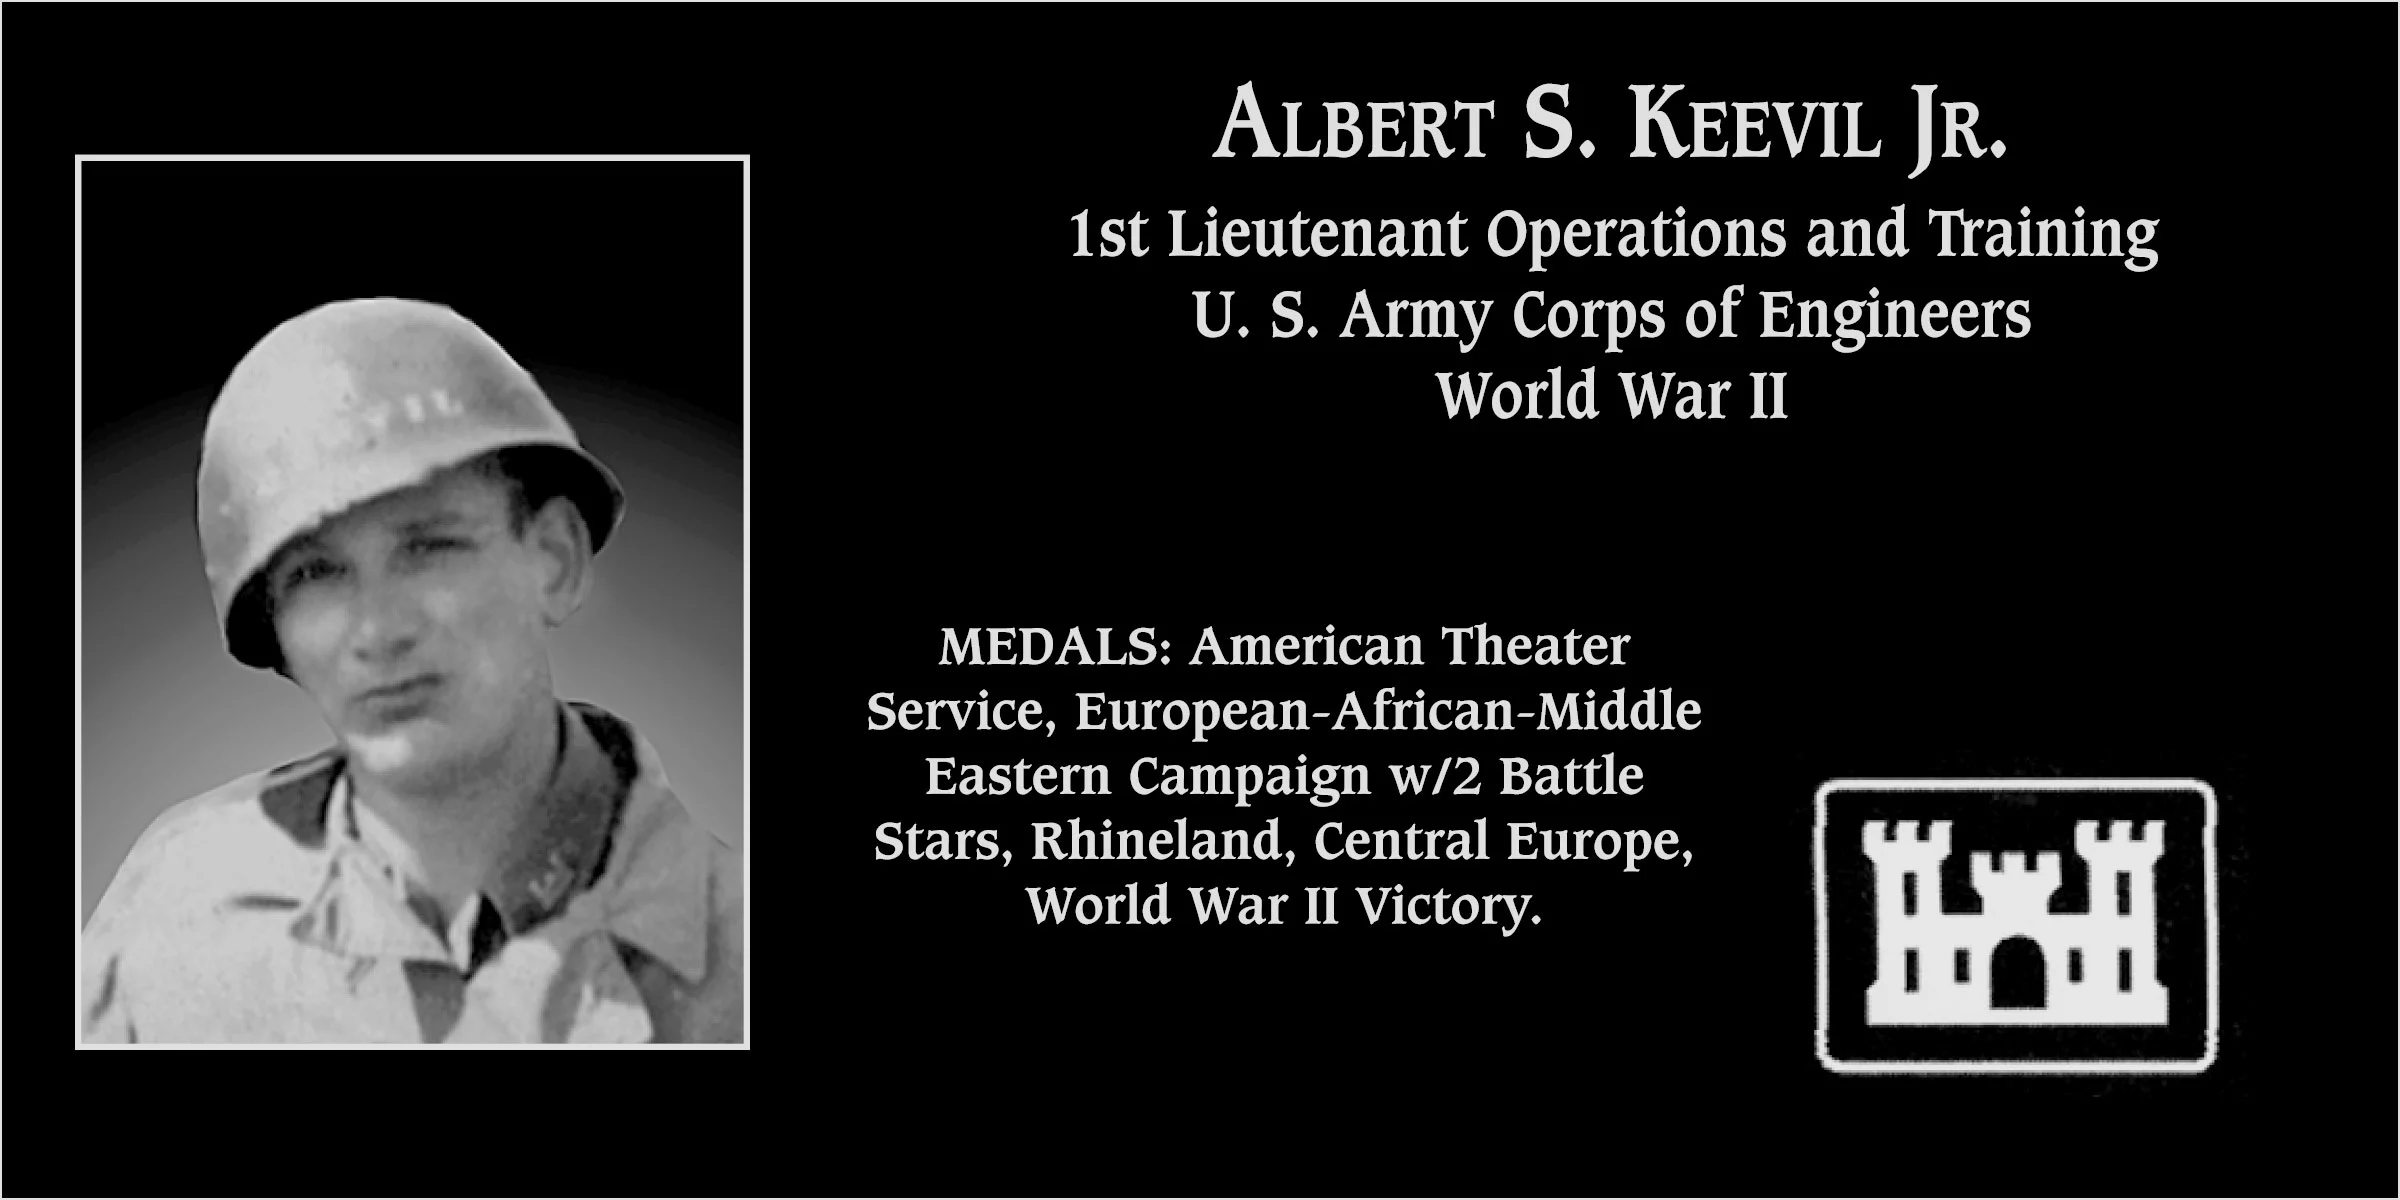 Albert S Keevil, jr